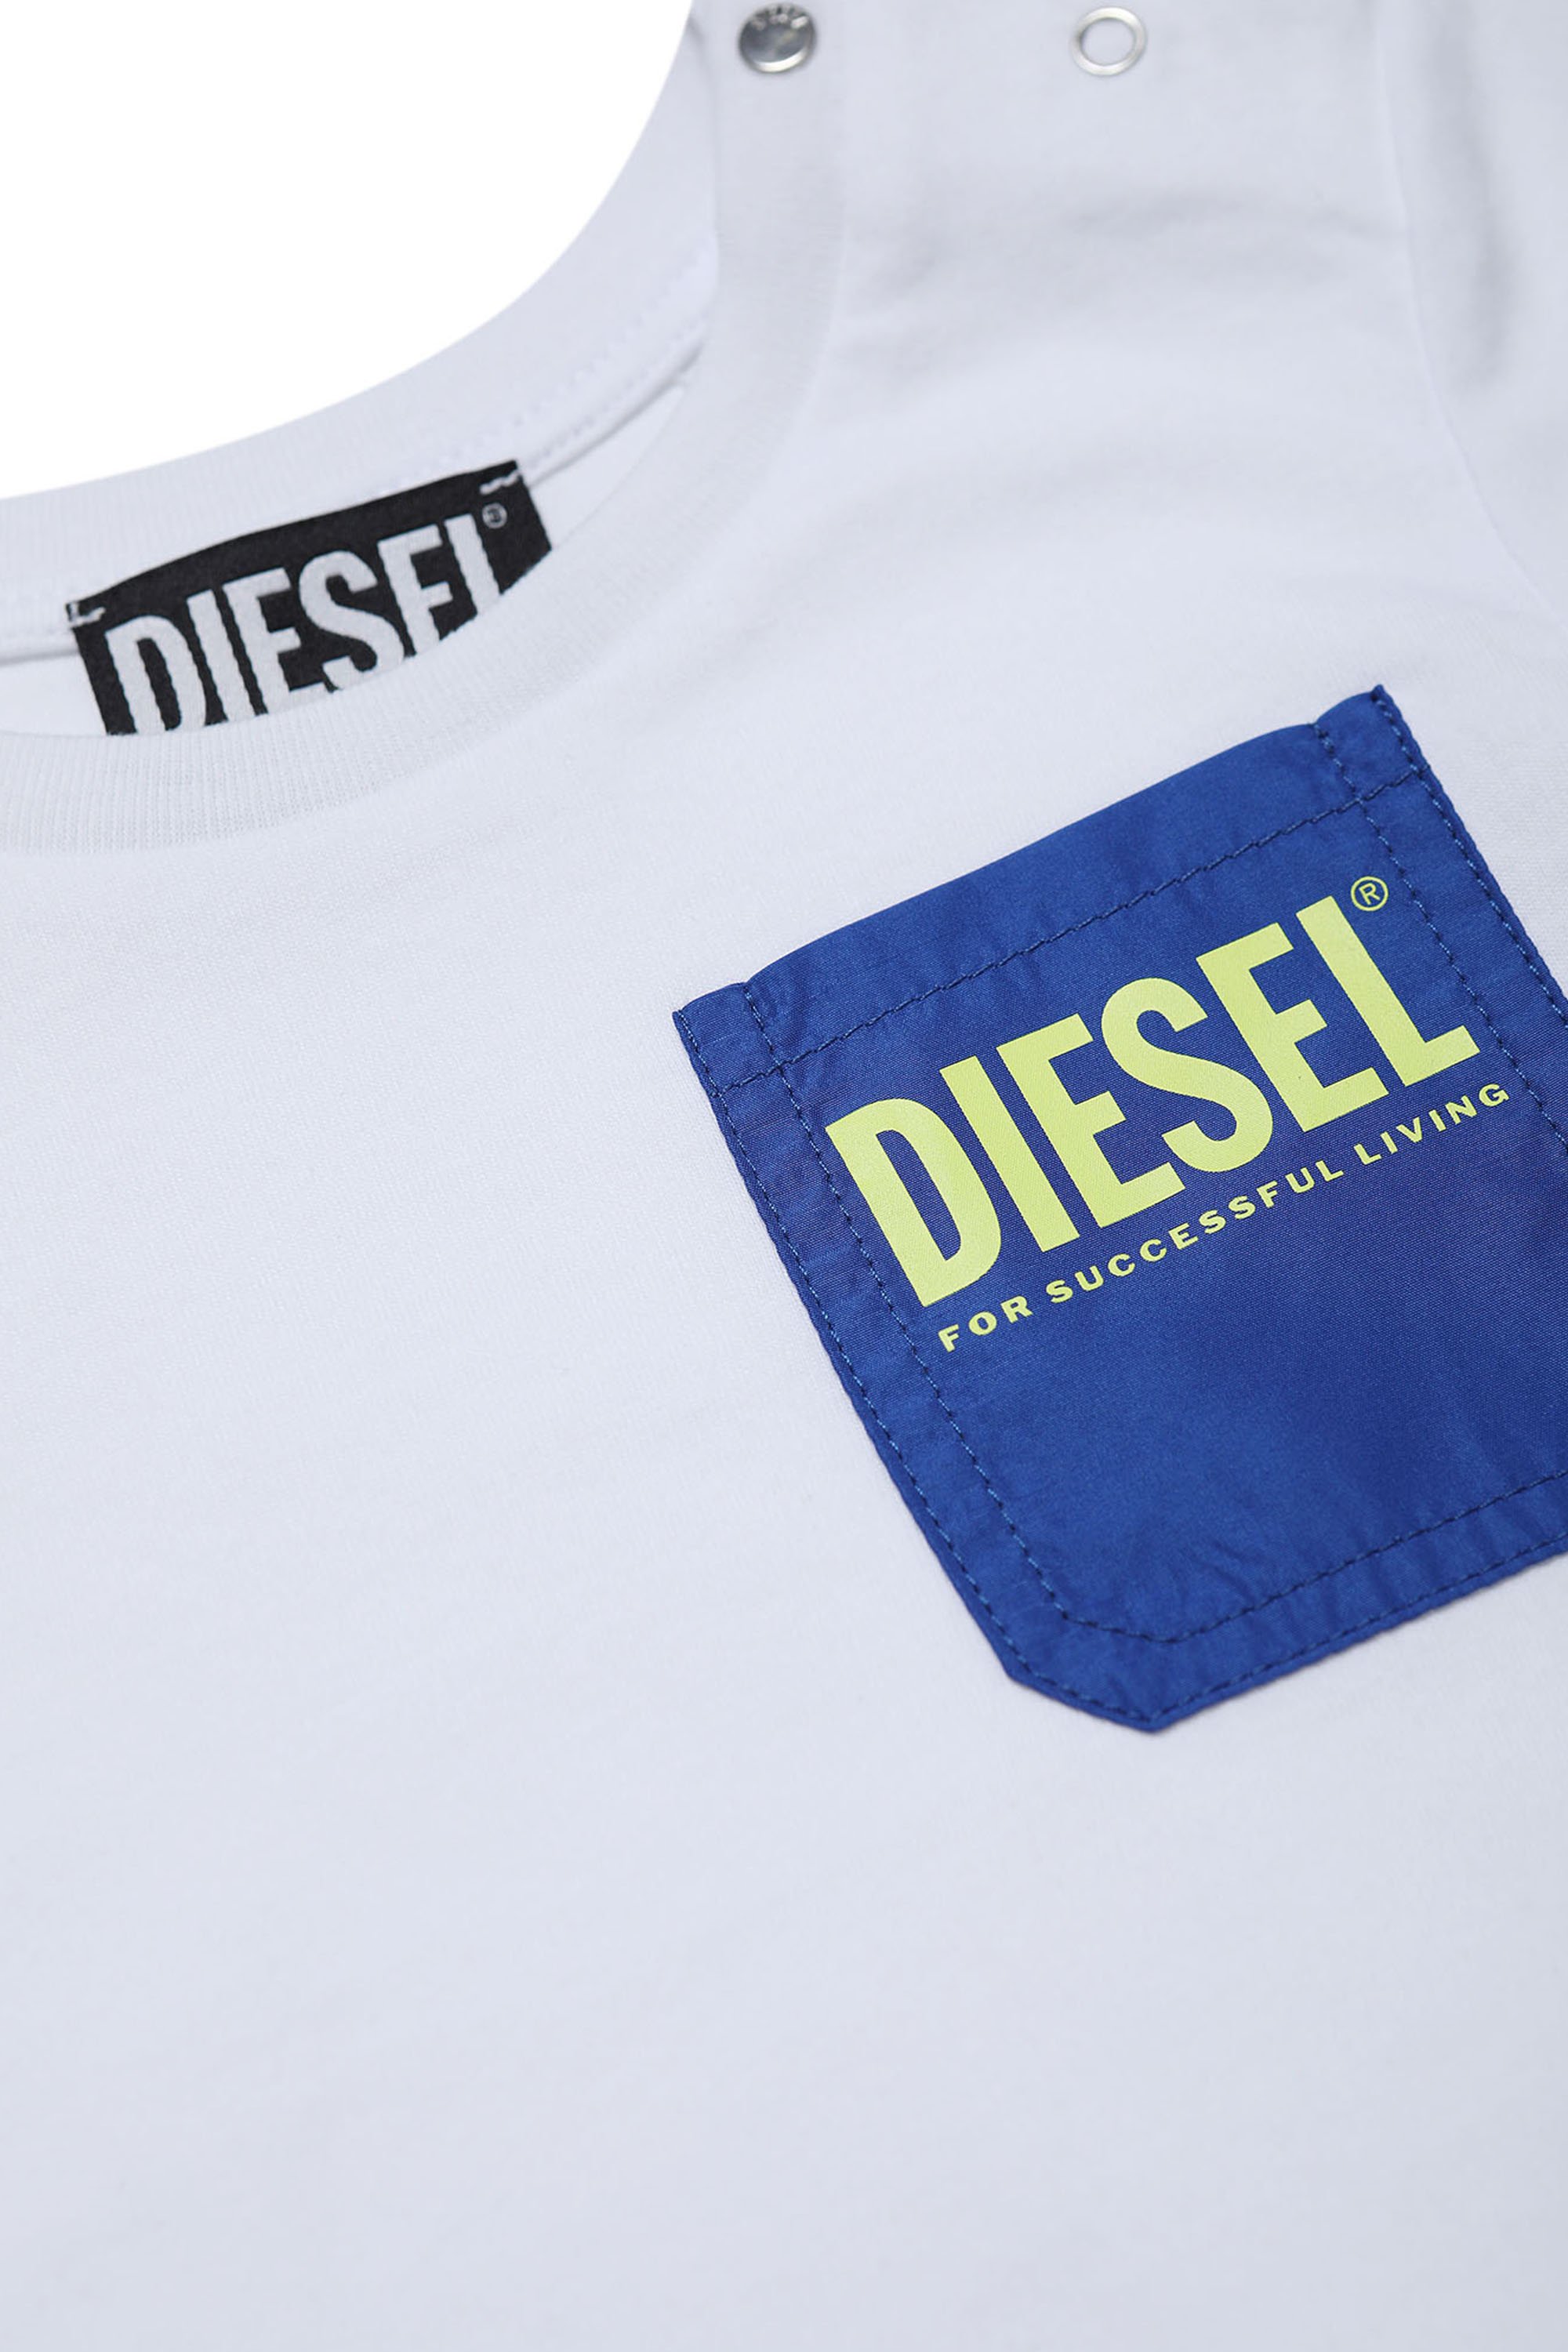 Diesel - MTANAB, White/Blue - Image 3